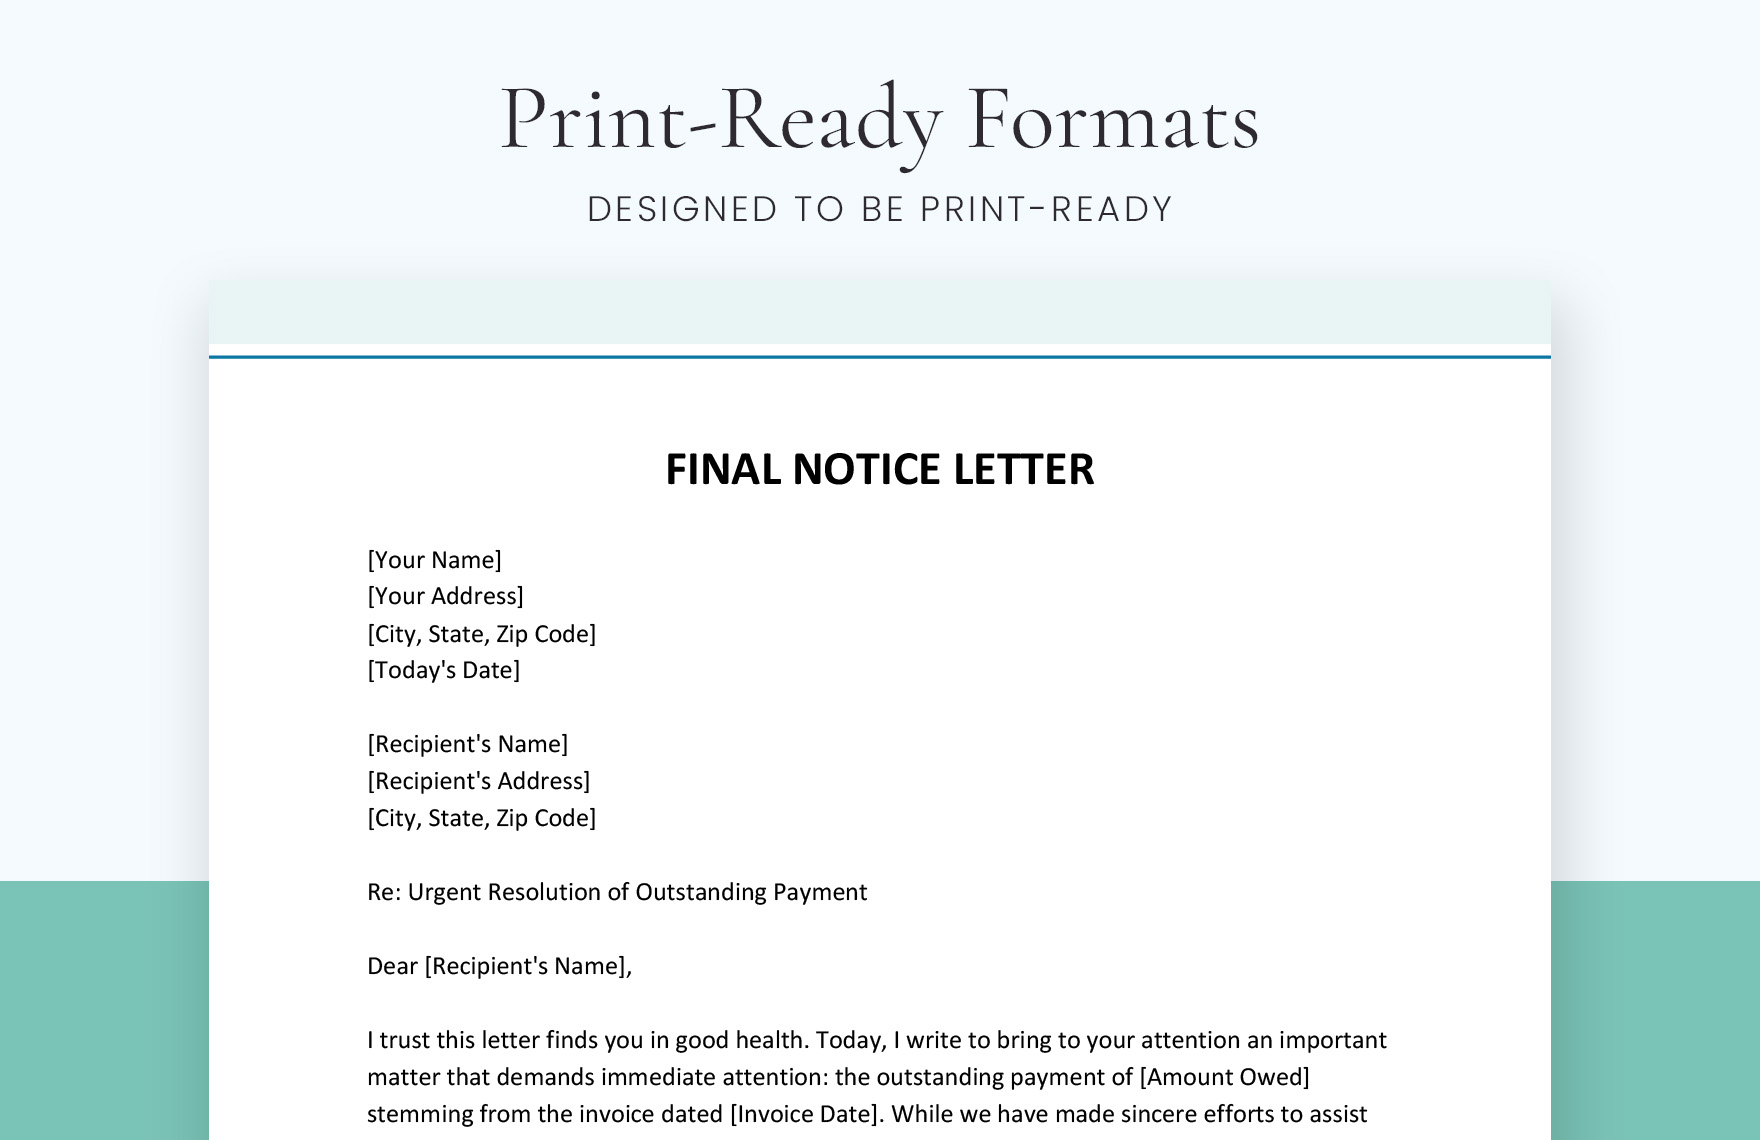 Final Notice Letter